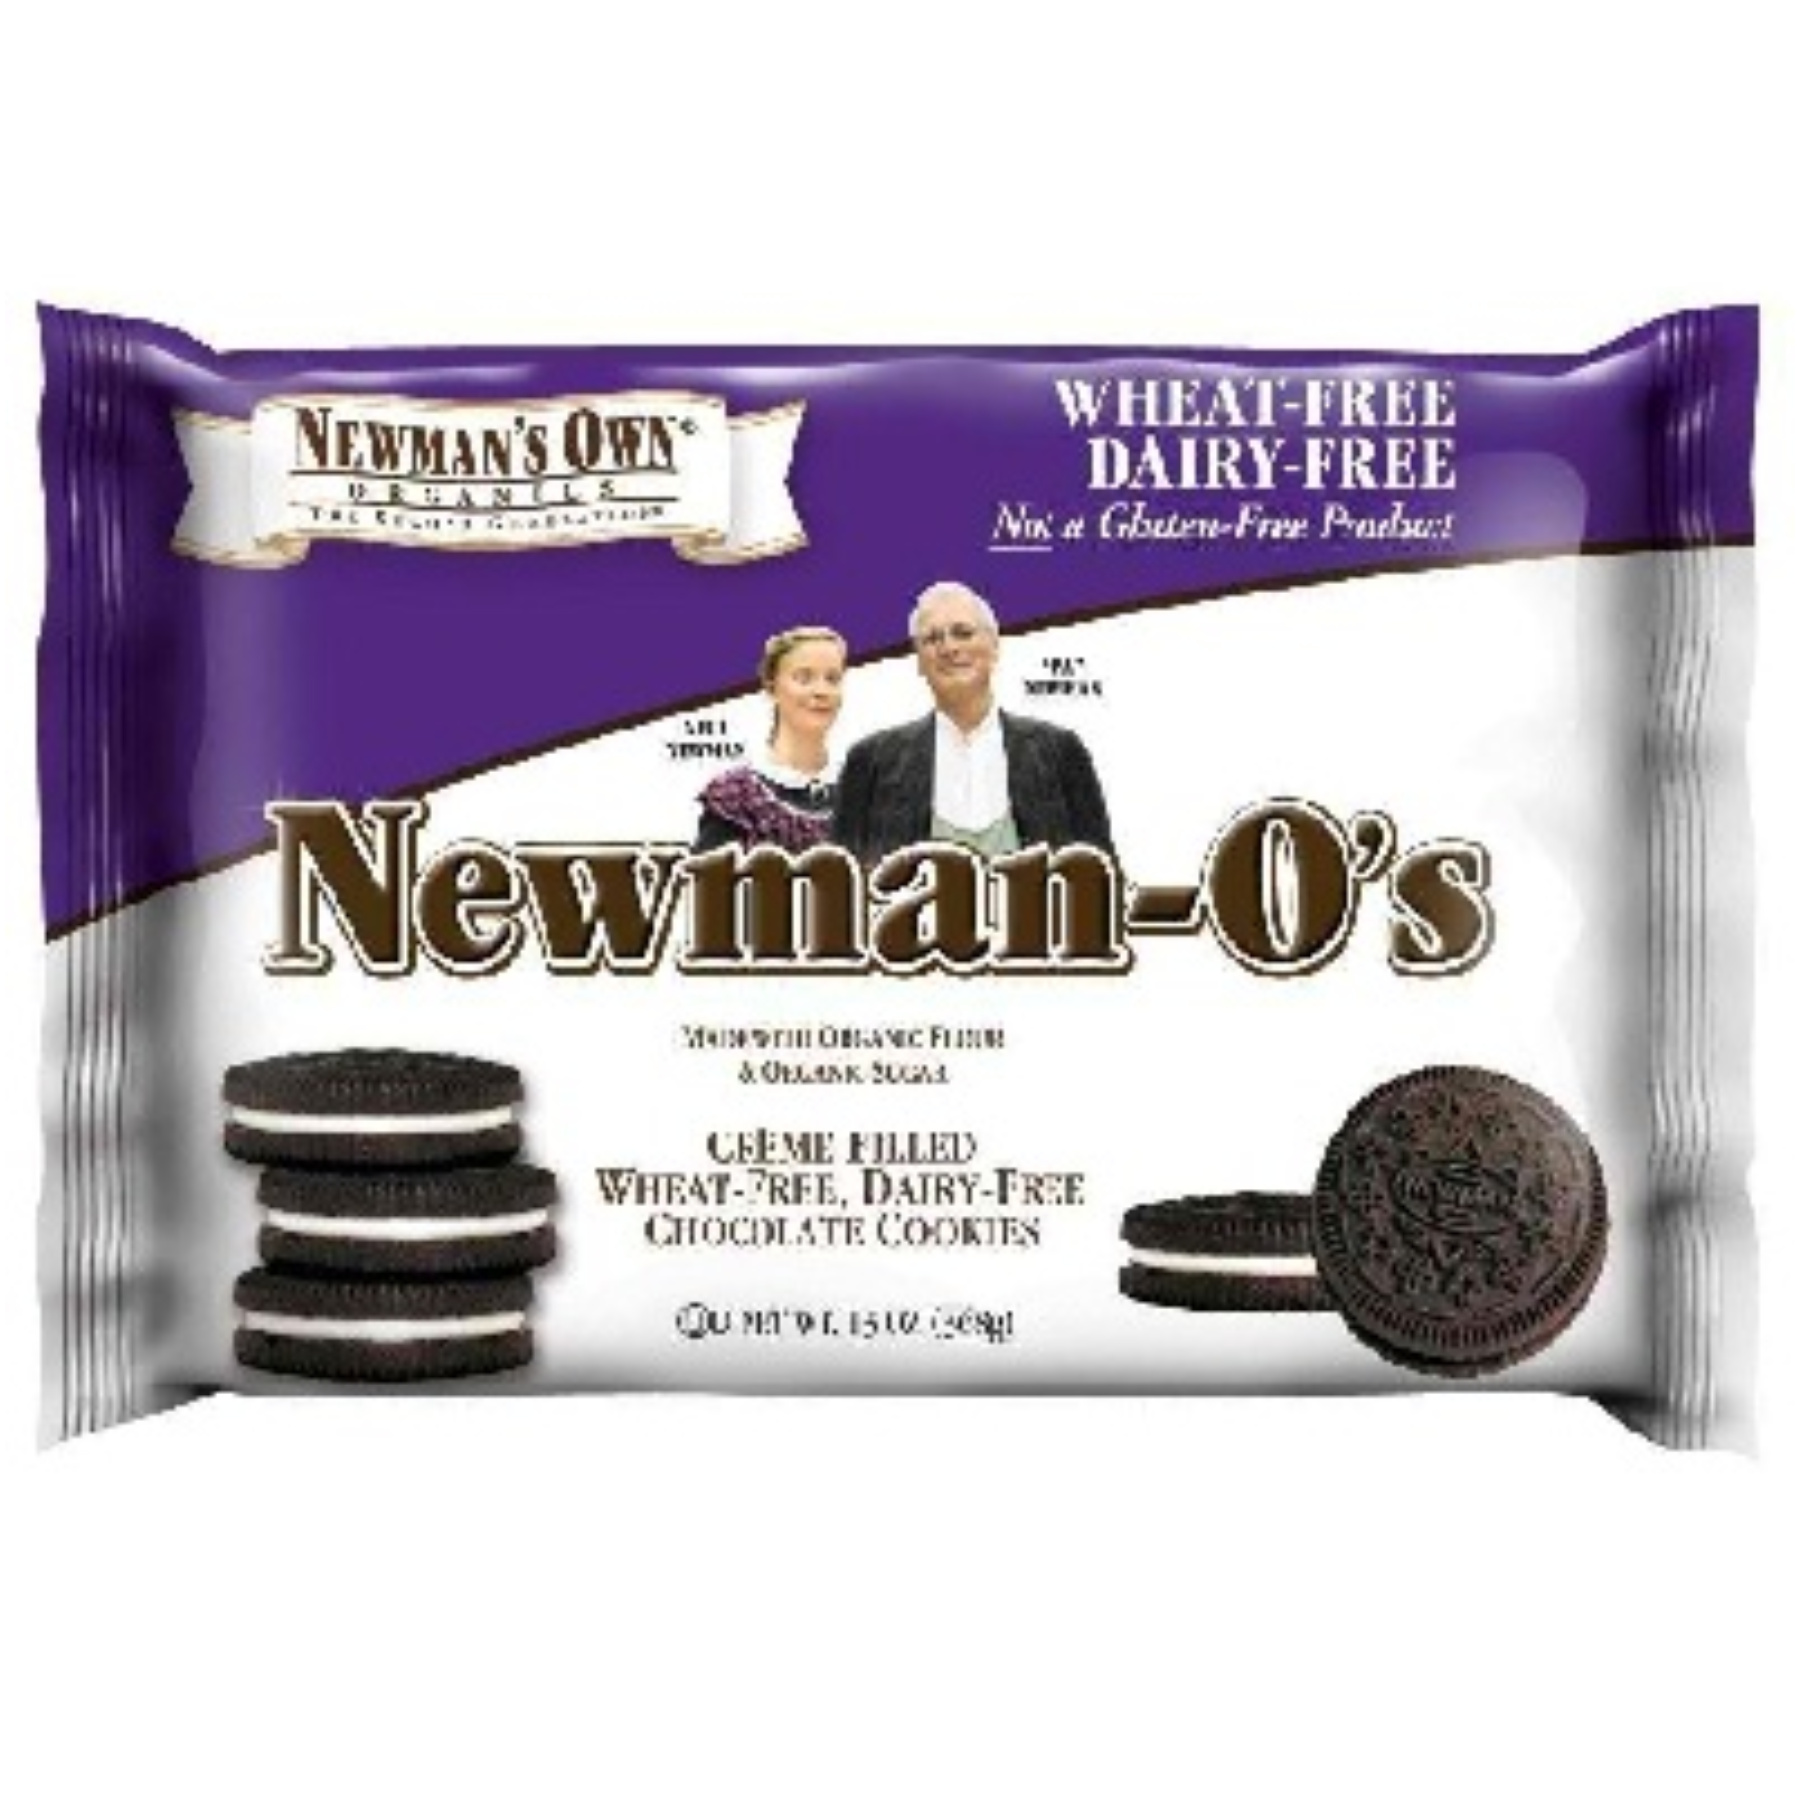 Newmans Own Organics Newmans Own Special Blend B008K9TOU0 